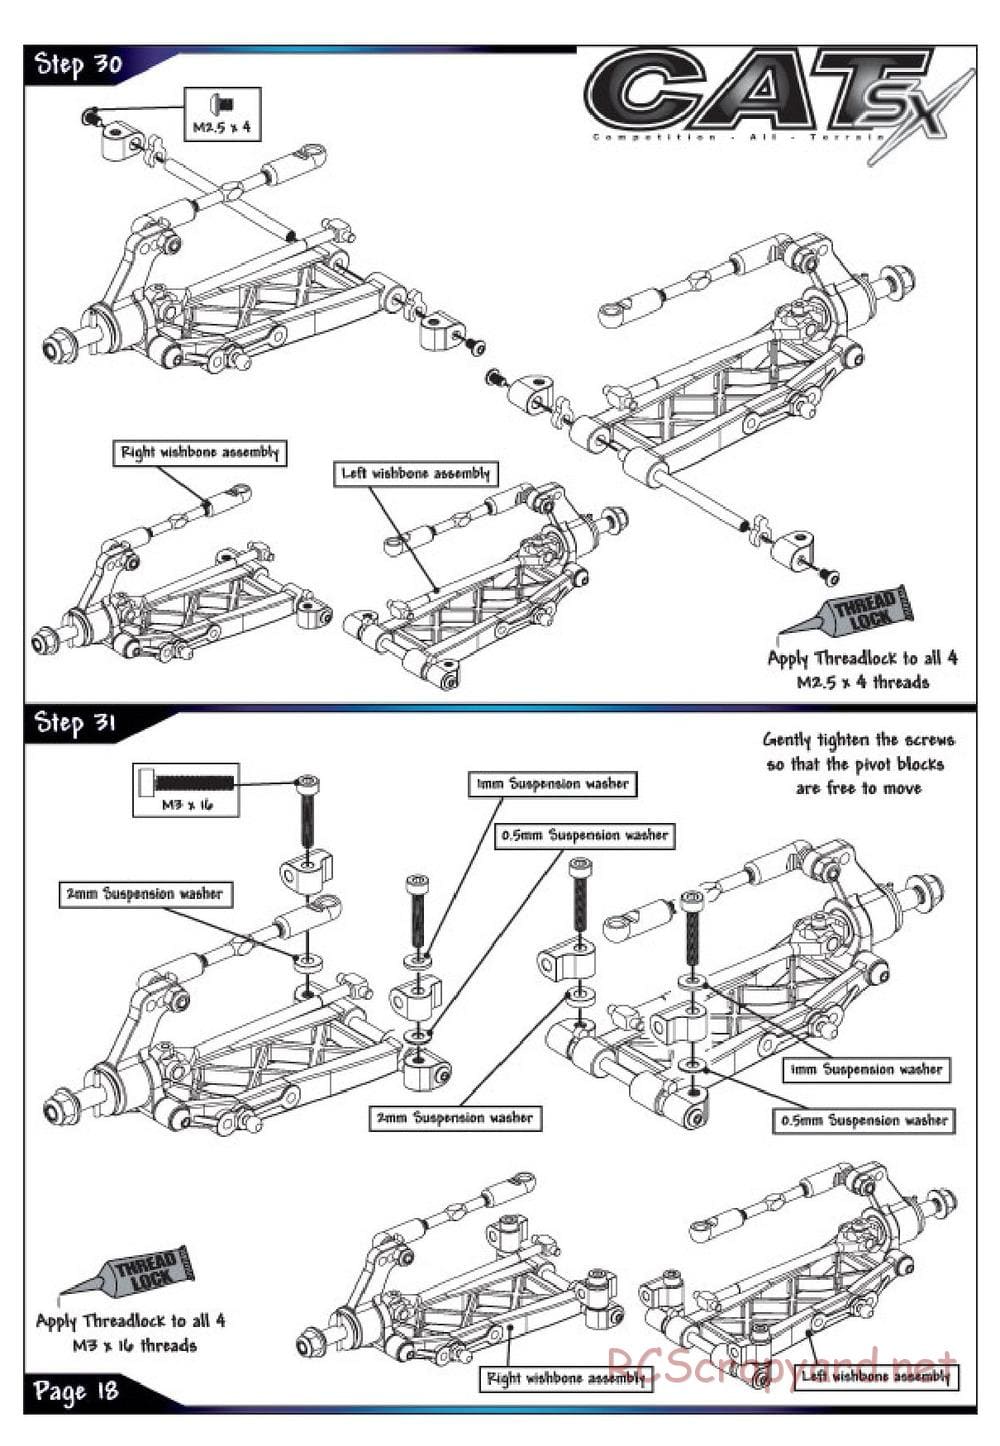 Schumacher - Cat SX - Manual - Page 11